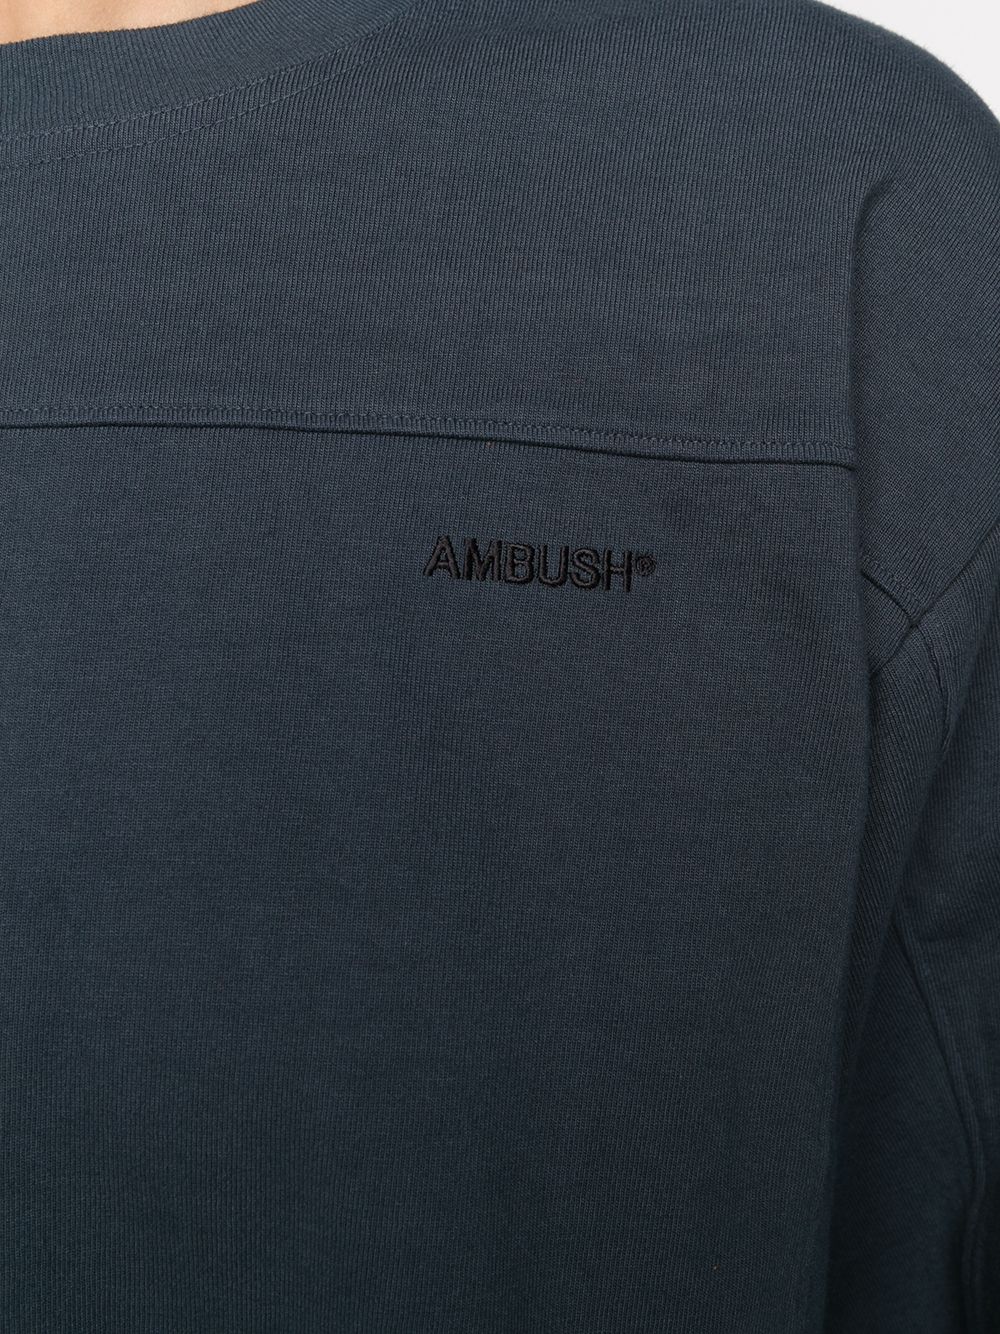 фото Ambush рубашка с длинными рукавами и вставками